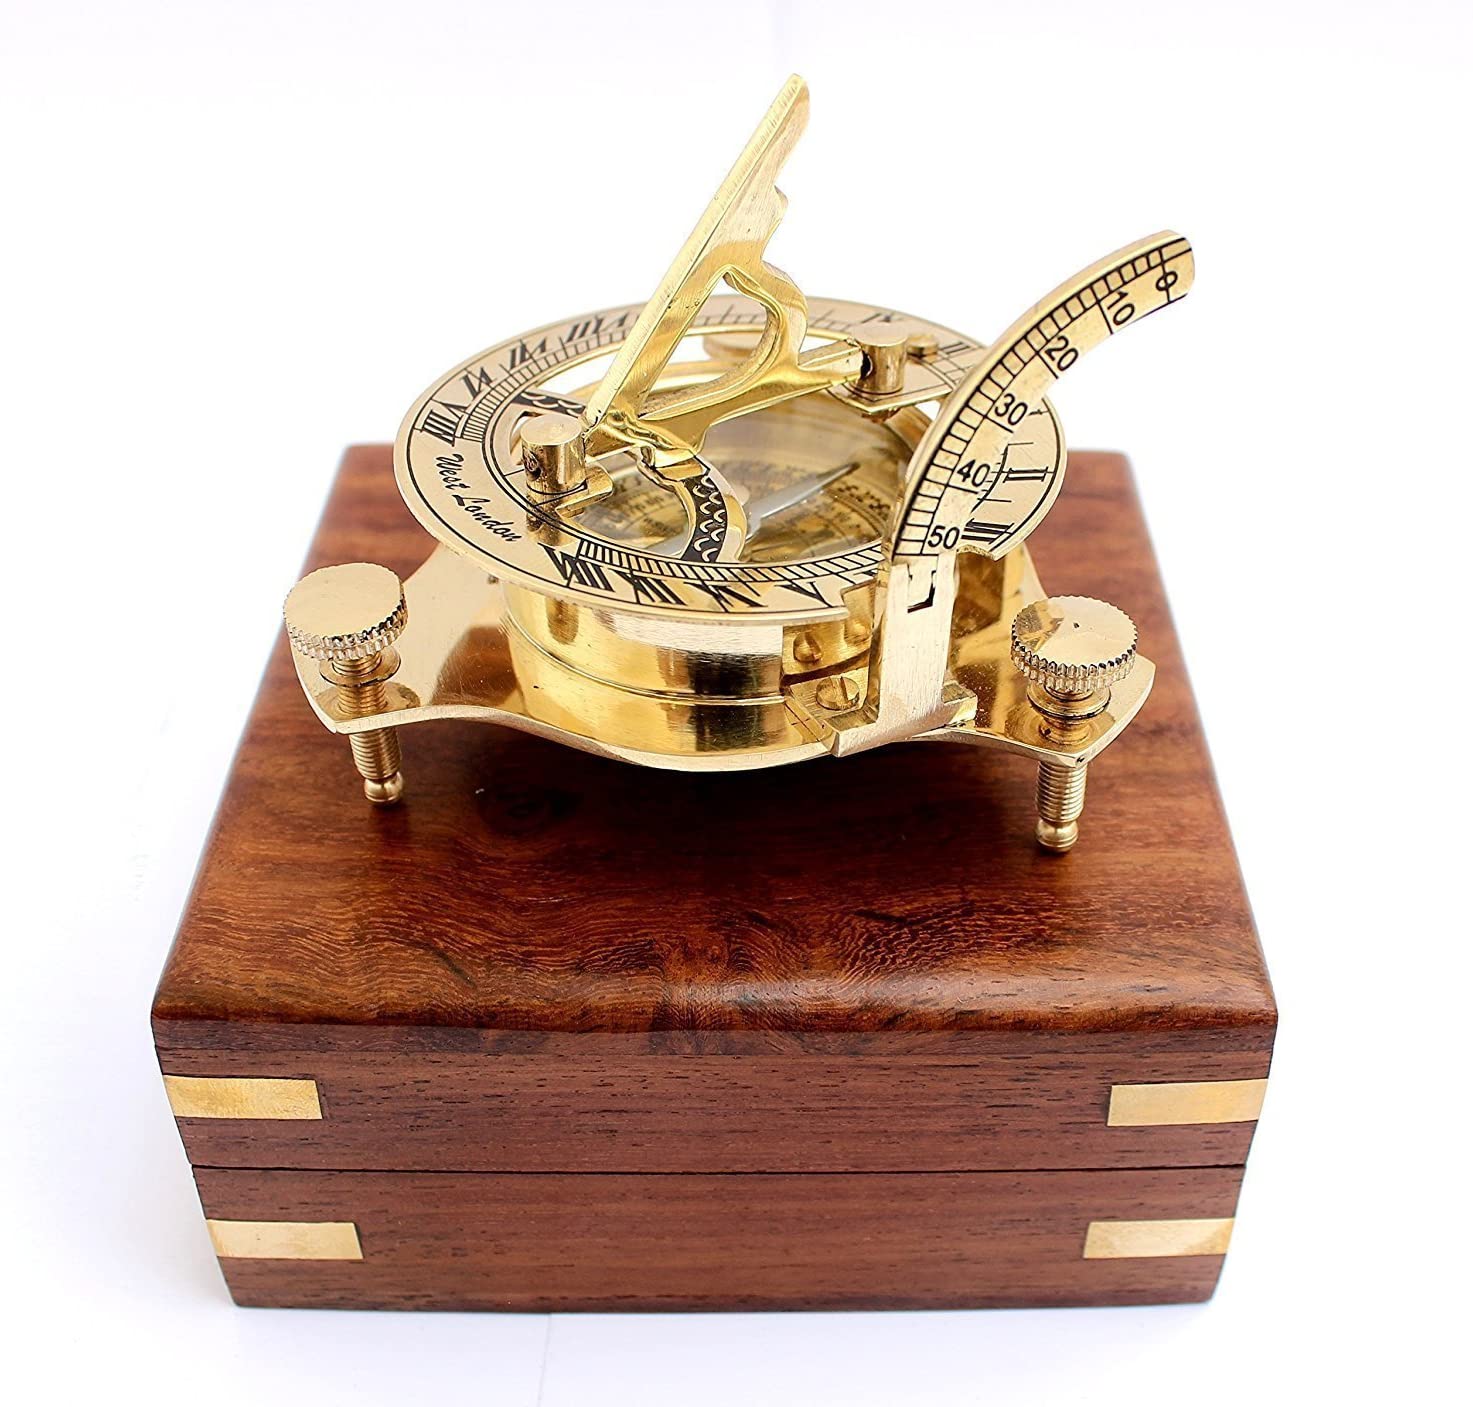 Nautical West London Antique Brass Sundial Compass 2.5 Inch Antique Compass Brass Antique Finish Camping Compass Nautical Compass Vintage Navigation Outdoor Directional Compass by Global Handicraft 